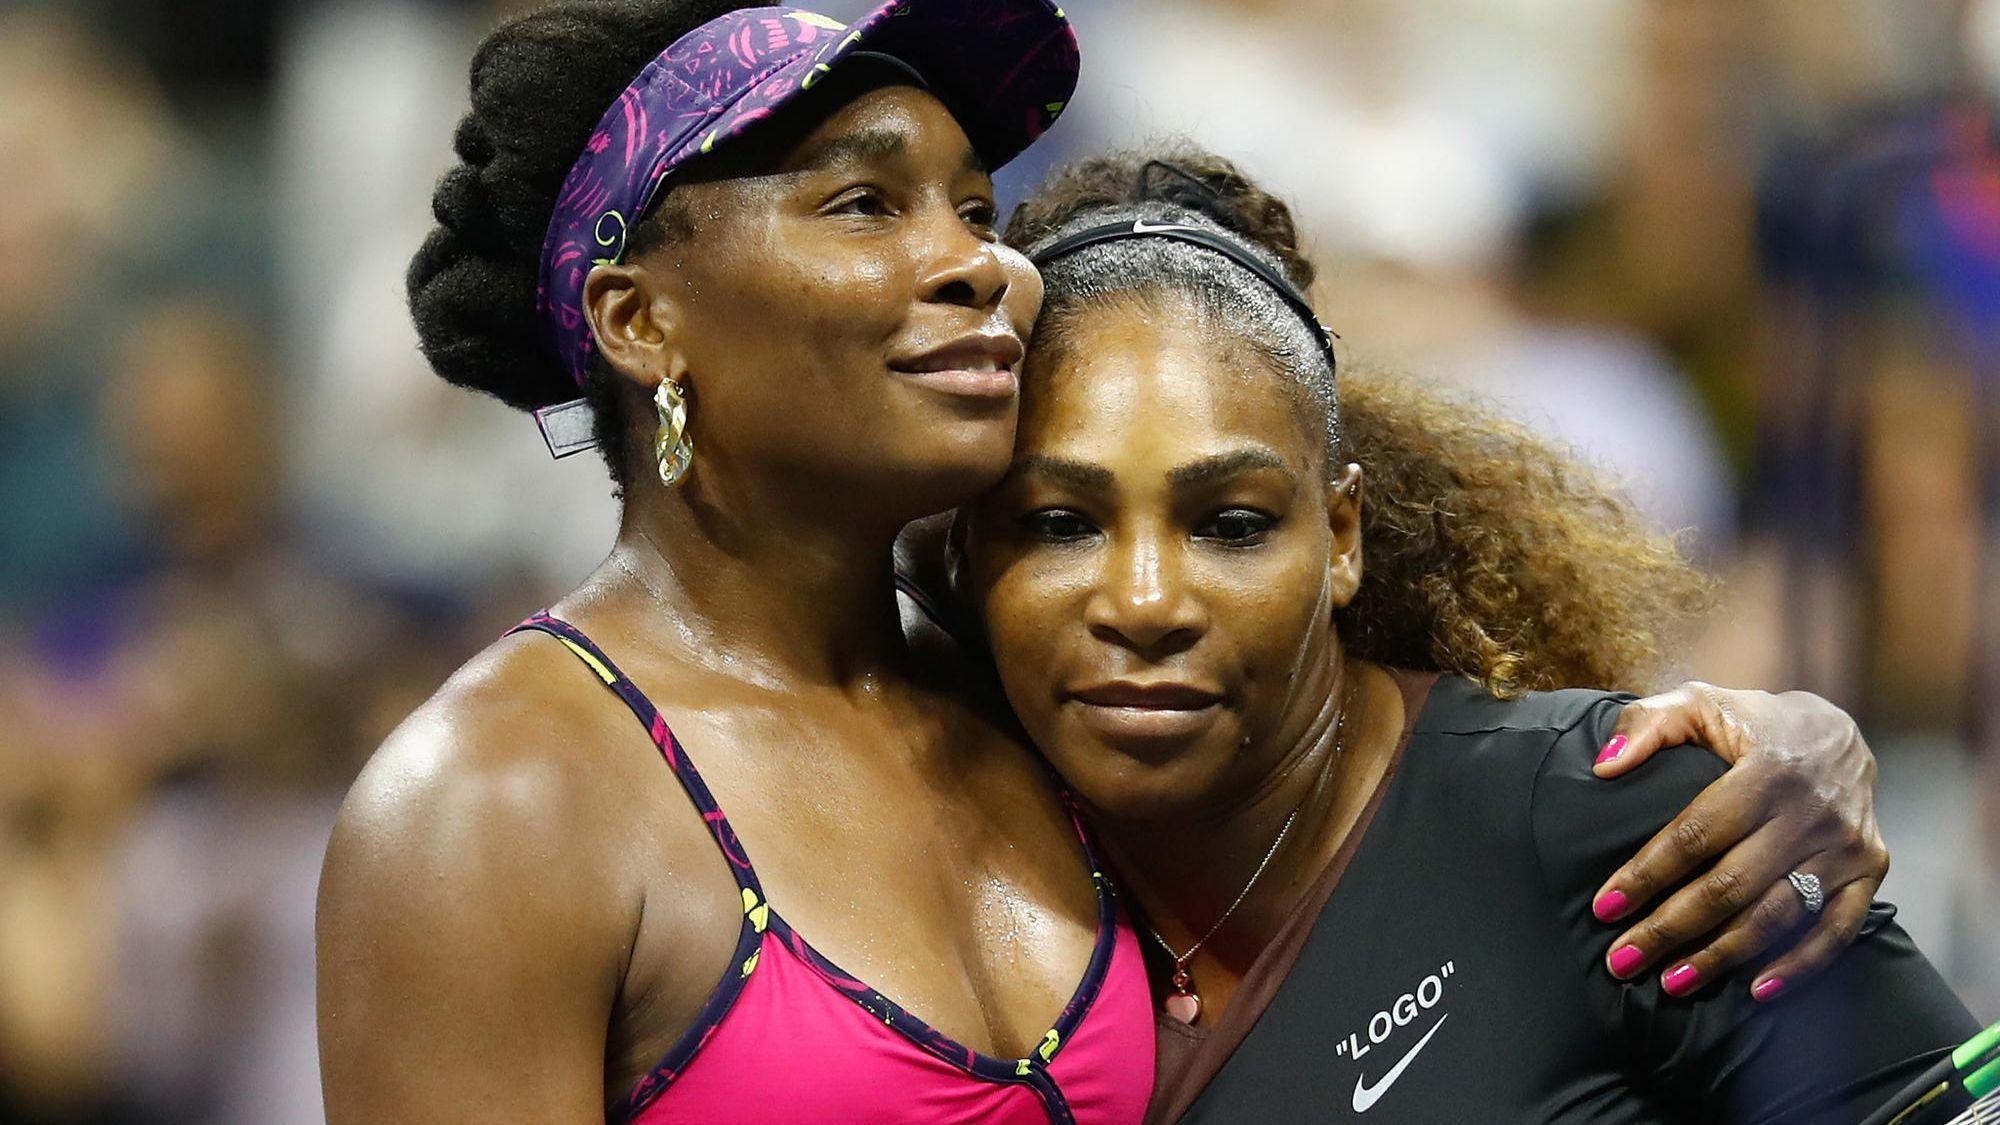 Venus and Serena Williams help inspire diversity in tennis - Chicago Tribune